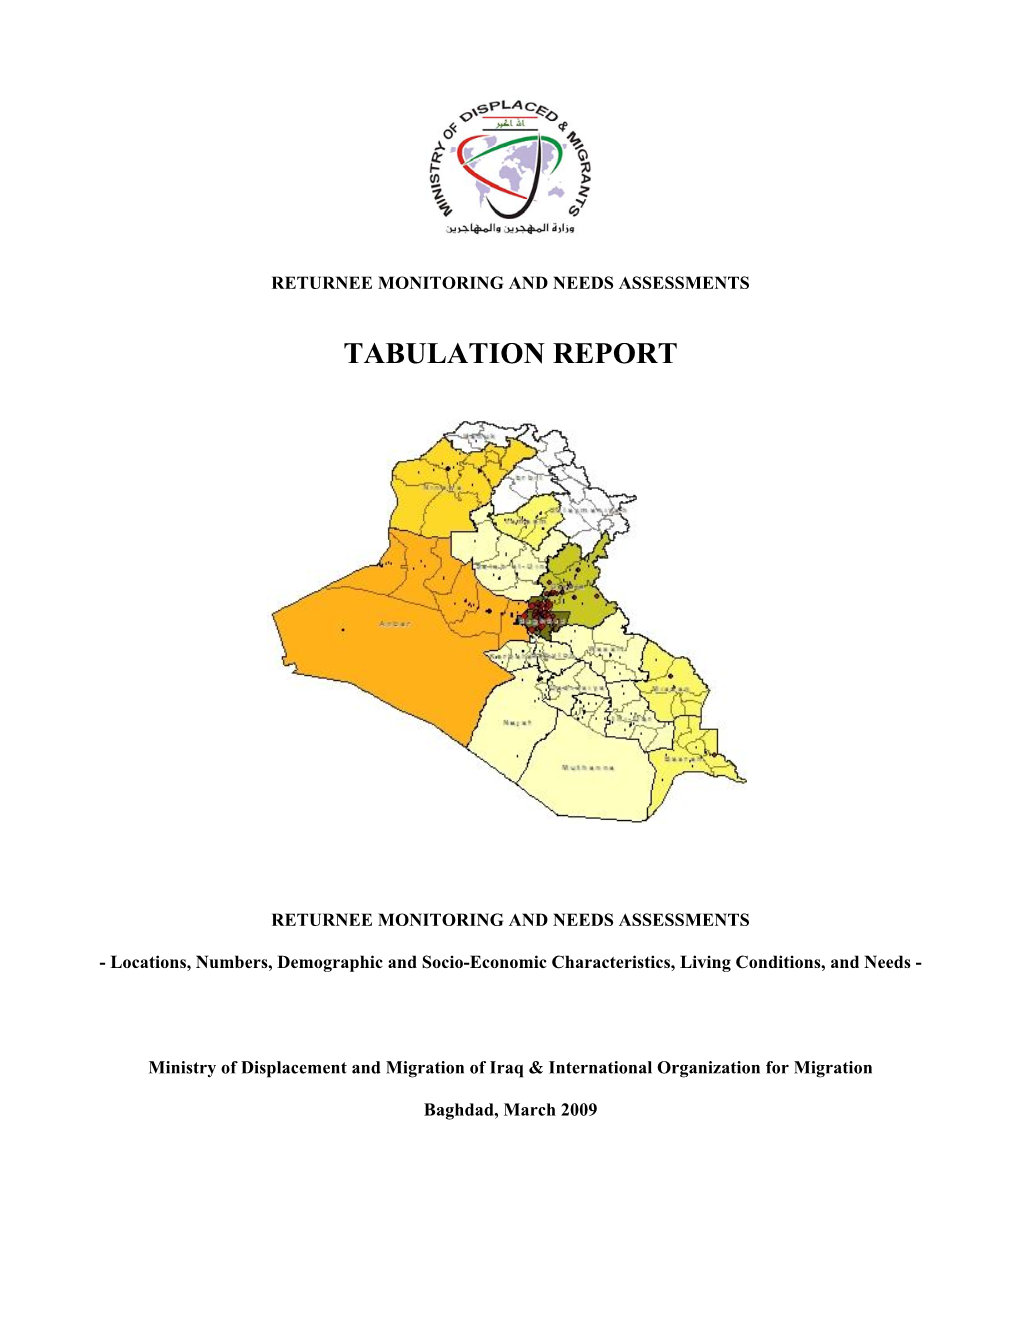 Tabulation Report